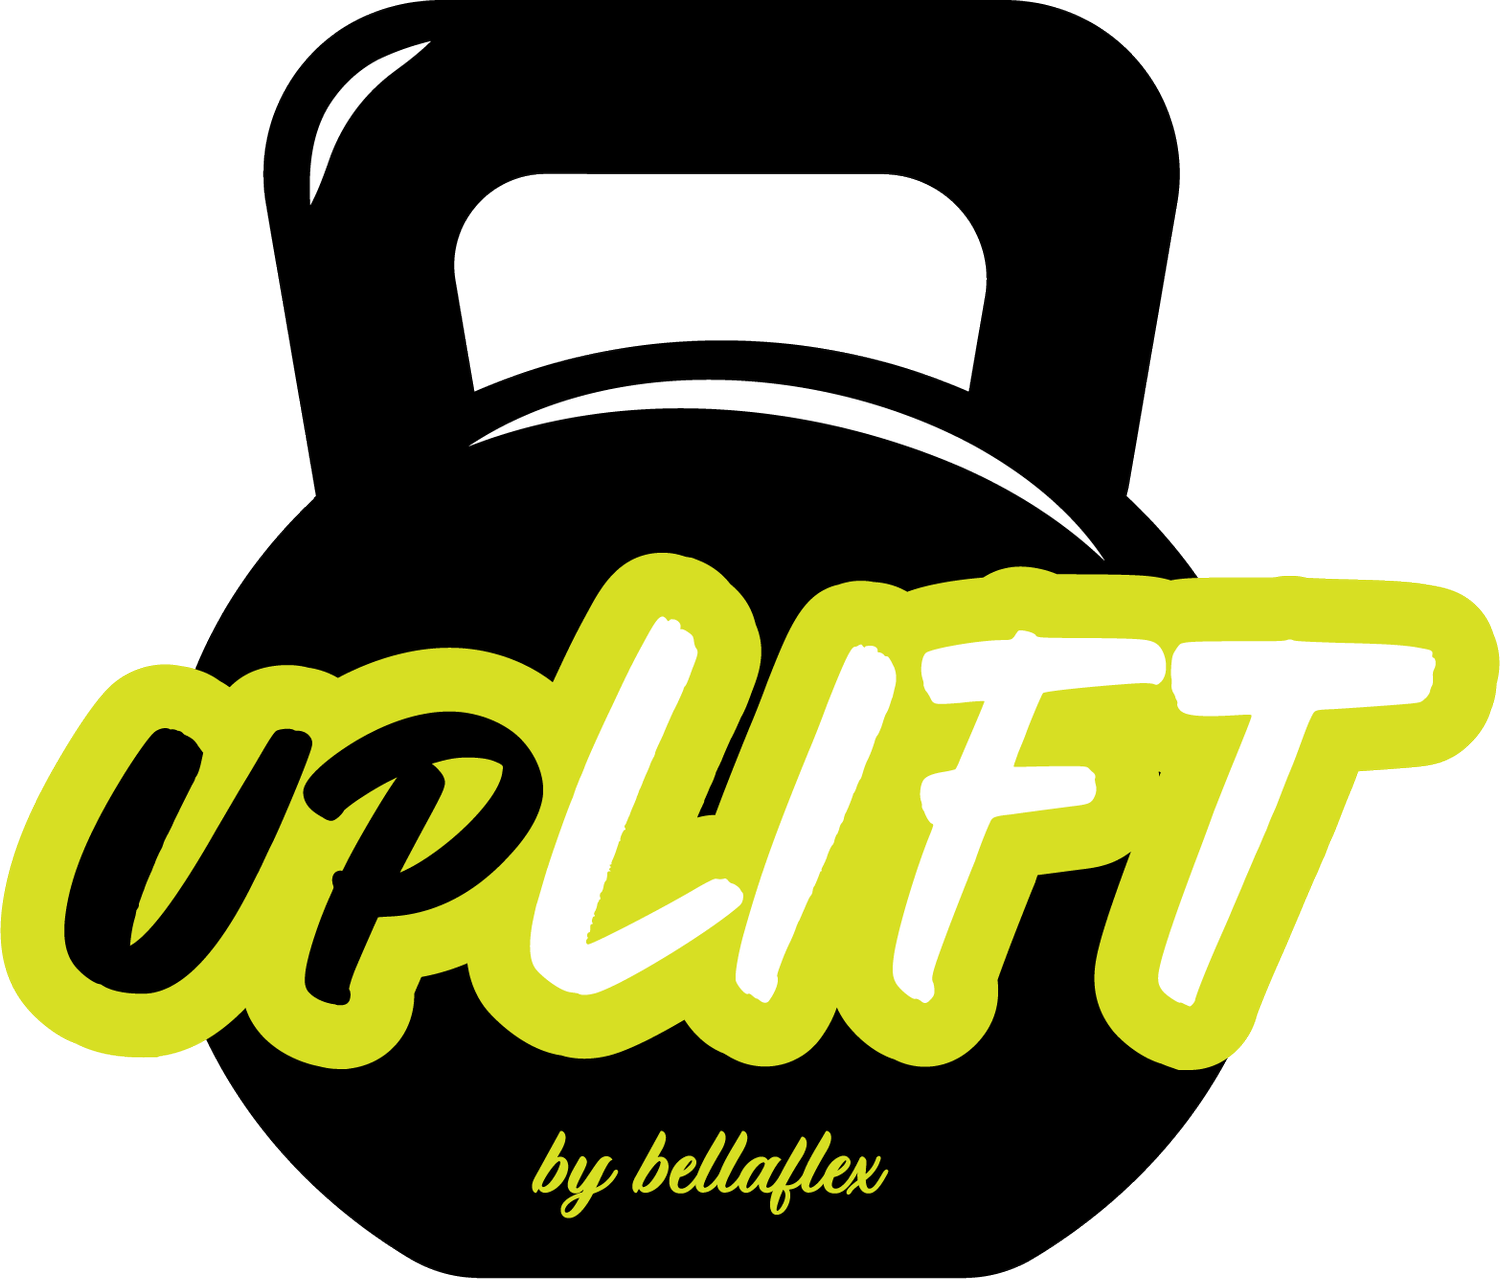 UPLIFT Kettlebell Club